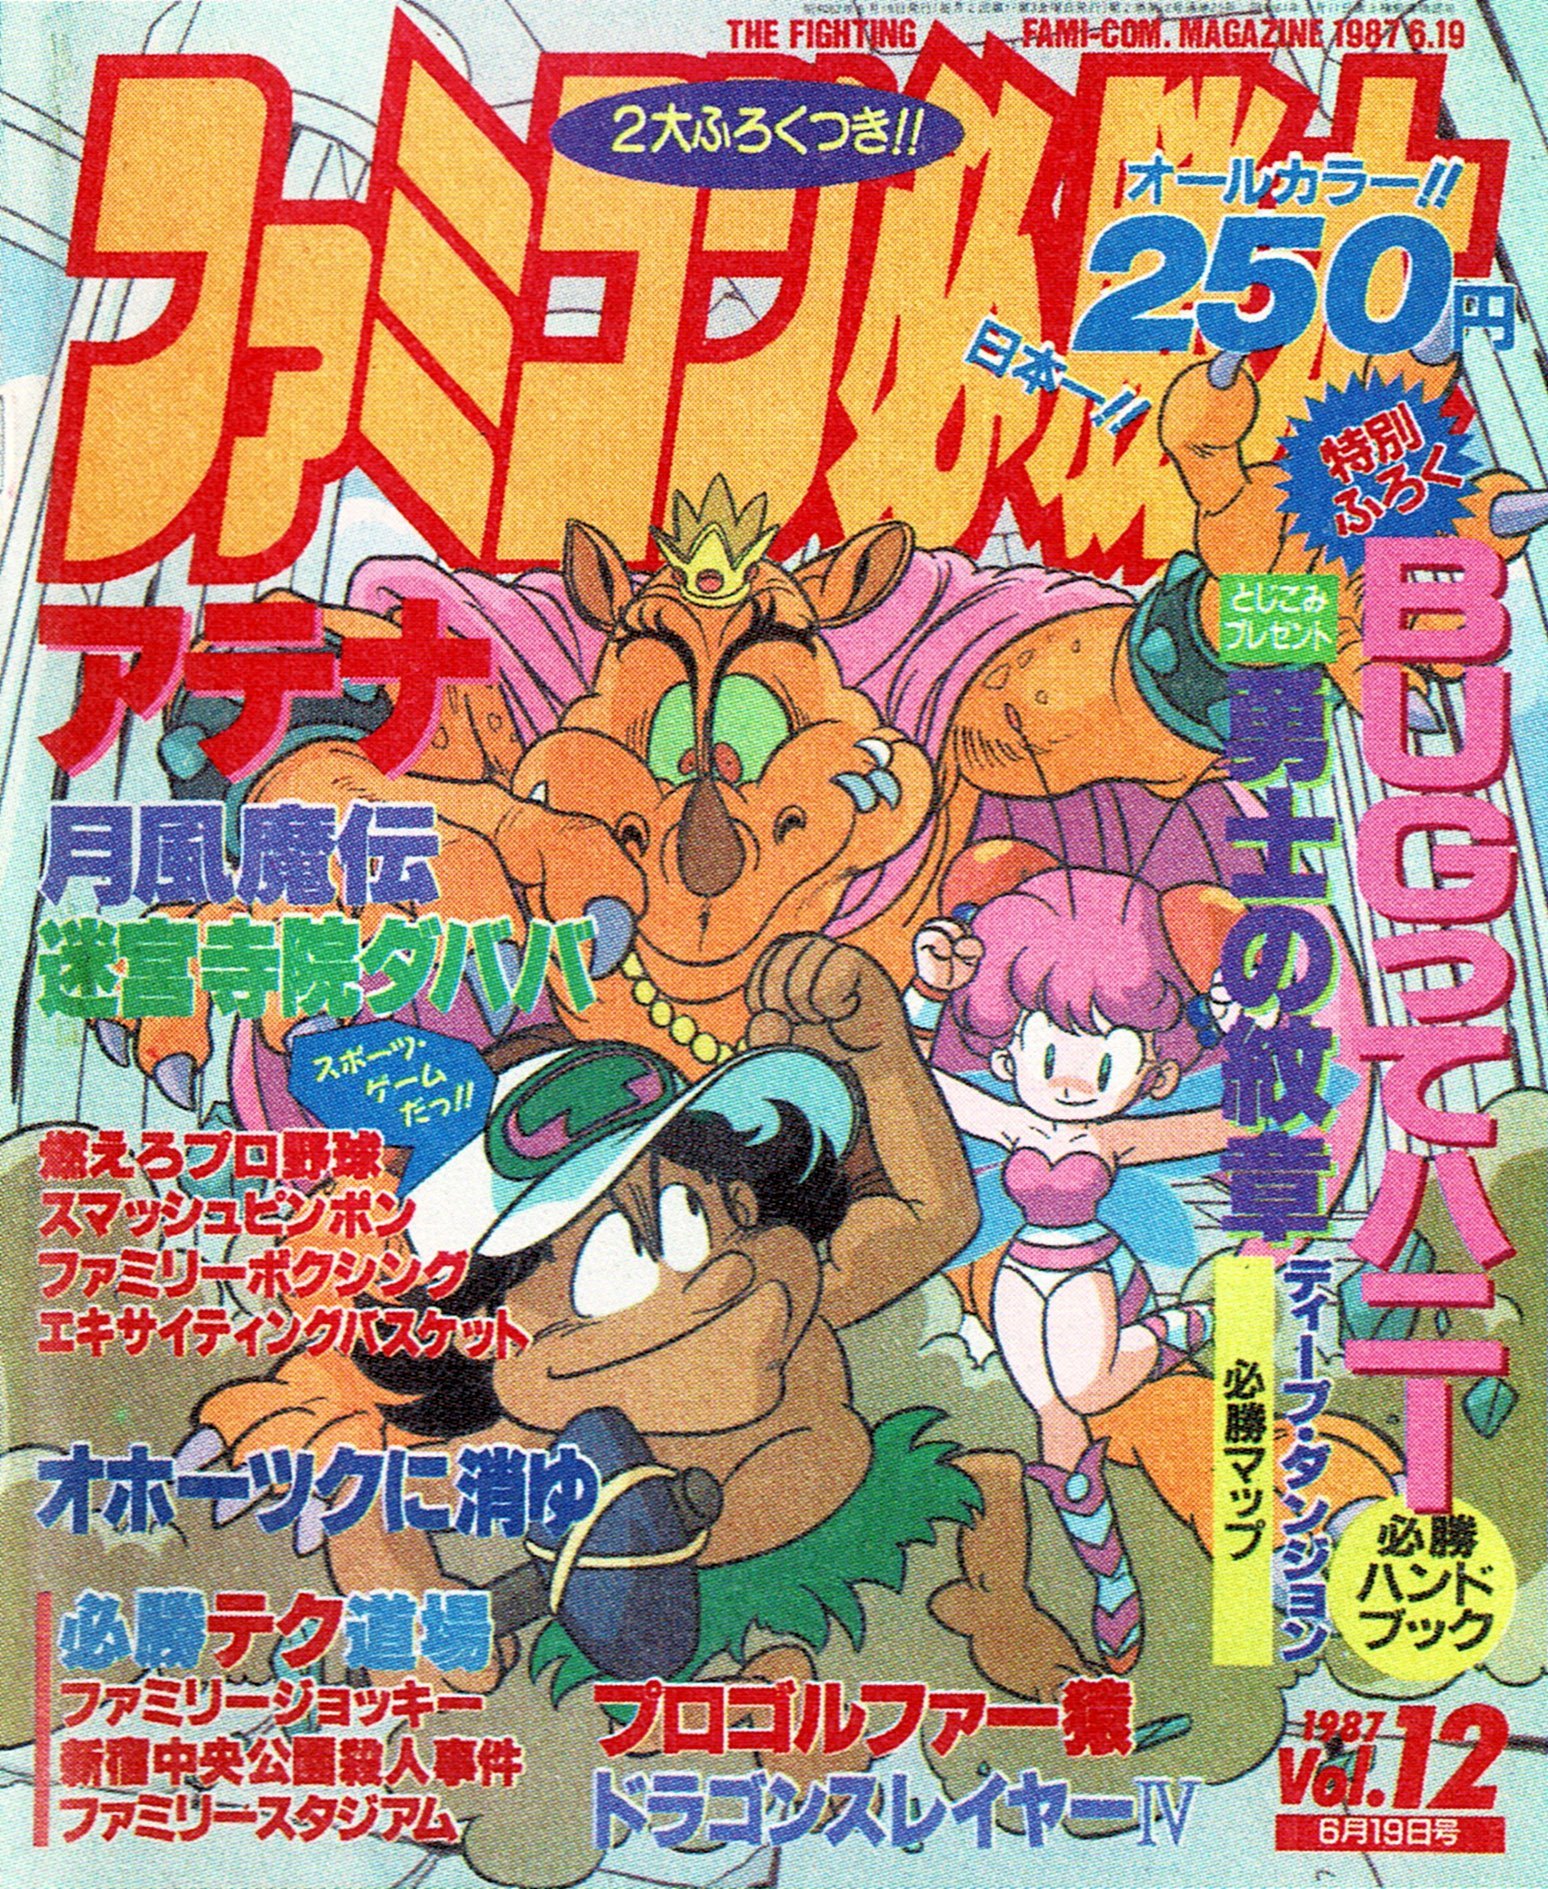 Famicom Hisshoubon Issue 025 (June 19, 1987) - Famicom Hisshoubon ...